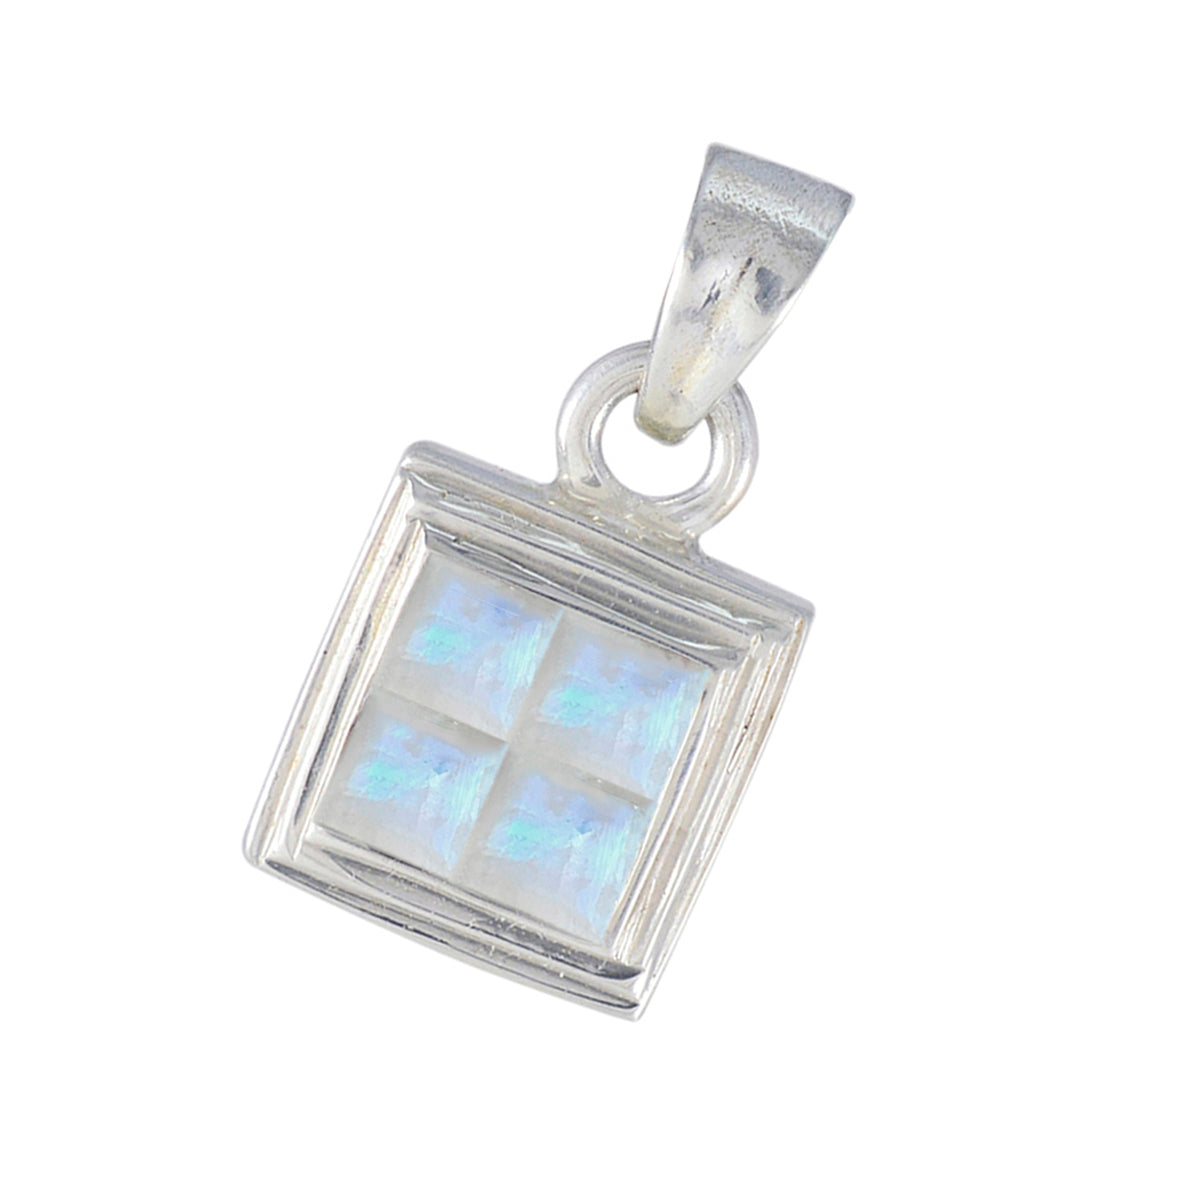 Riyo Glamorous Gemstone Square Faceted White Rainbow Moonstone 1071 Sterling Silver Pendant Gift For Teachers Day